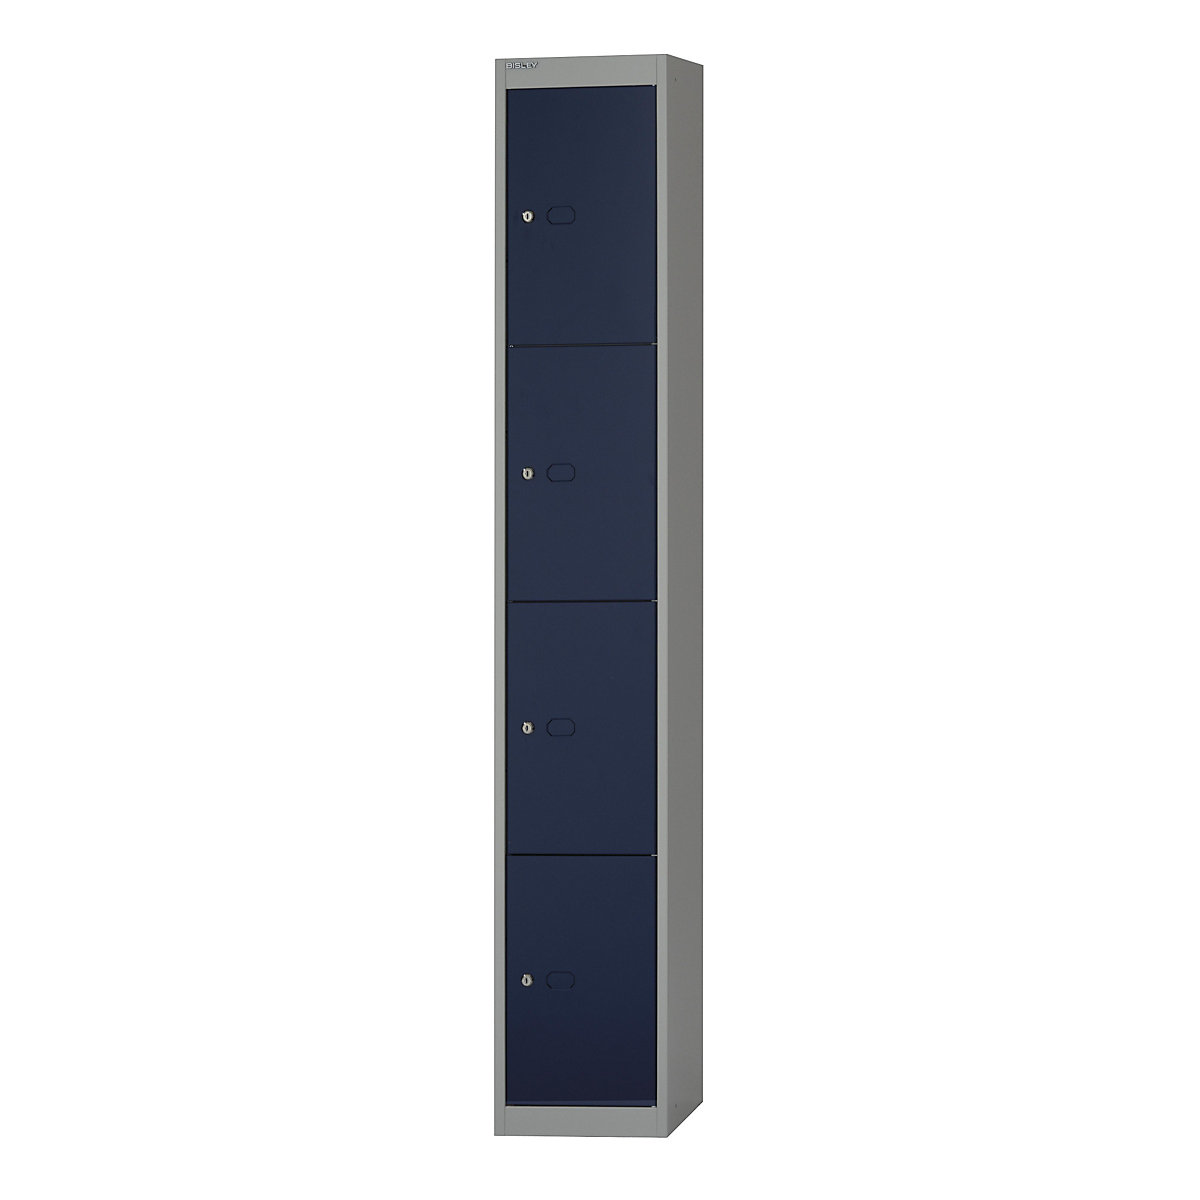 BISLEY OFFICE Schließfachsystem, Tiefe 305 mm, 4 Fächer, Korpusfarbe Lichtgrau, Türfarbe Oxfordblau